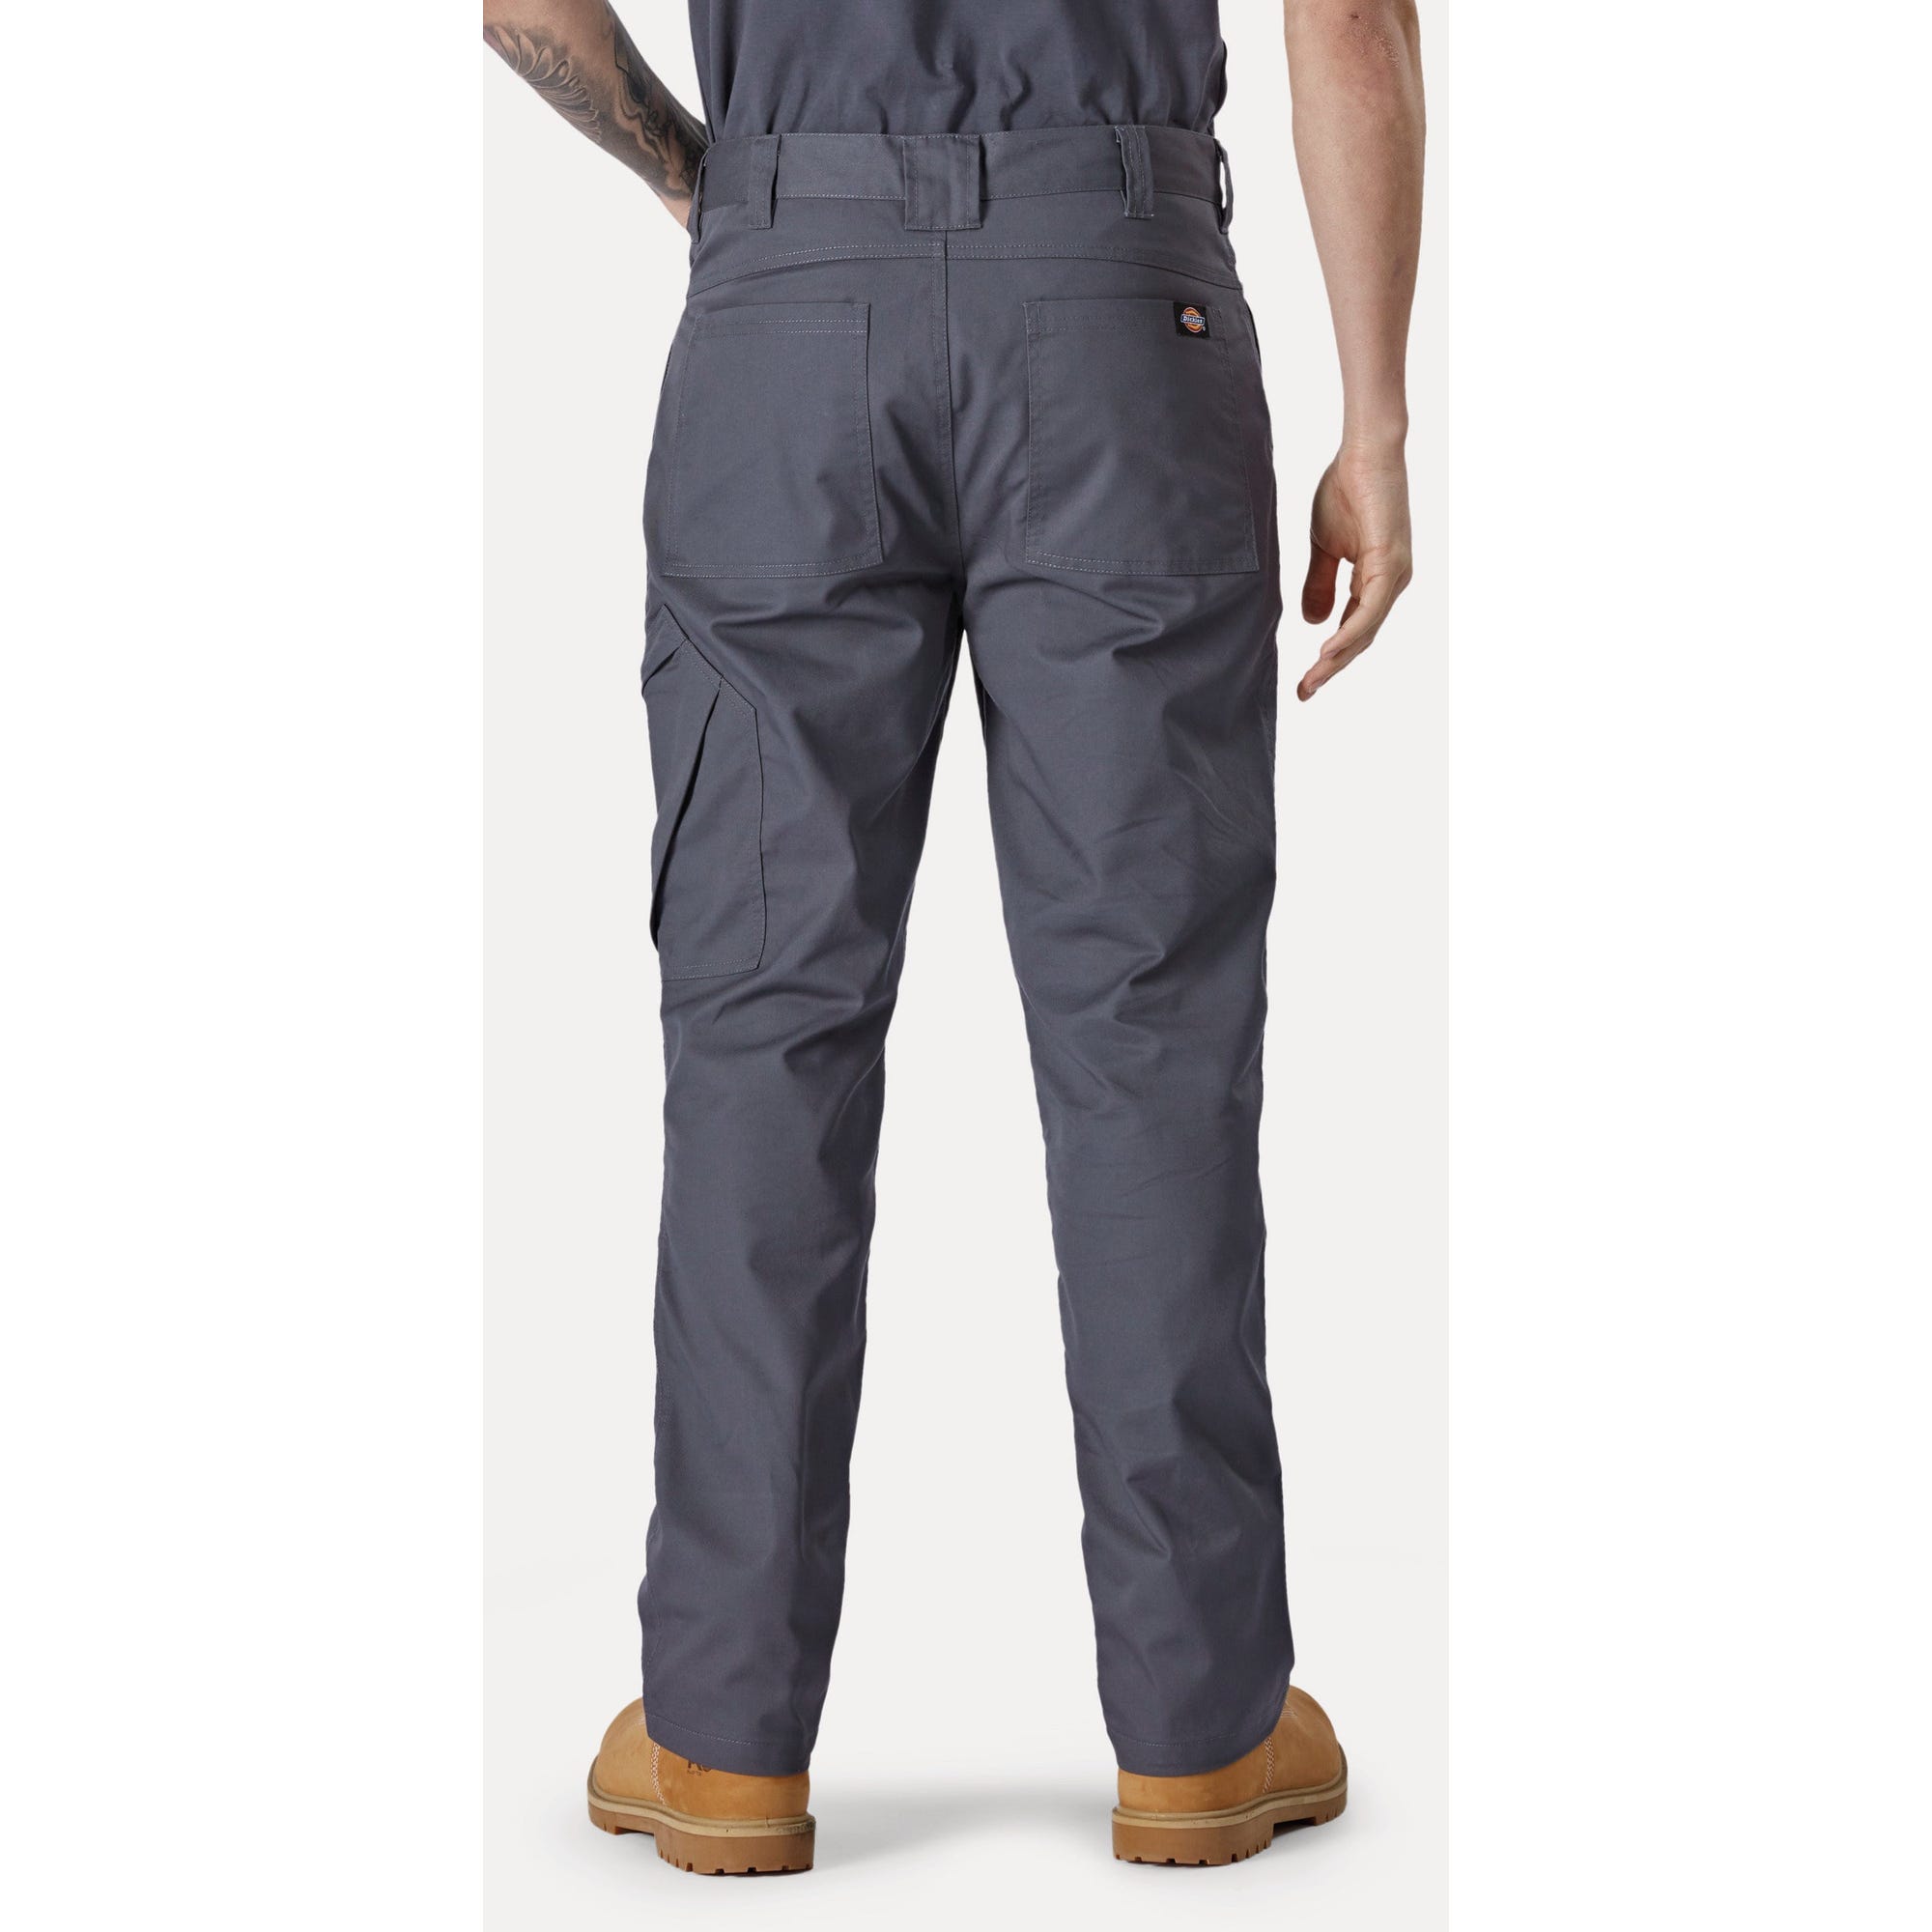 Pantalon de travail Action Flex bleu marine - Dickies - Taille 48 8